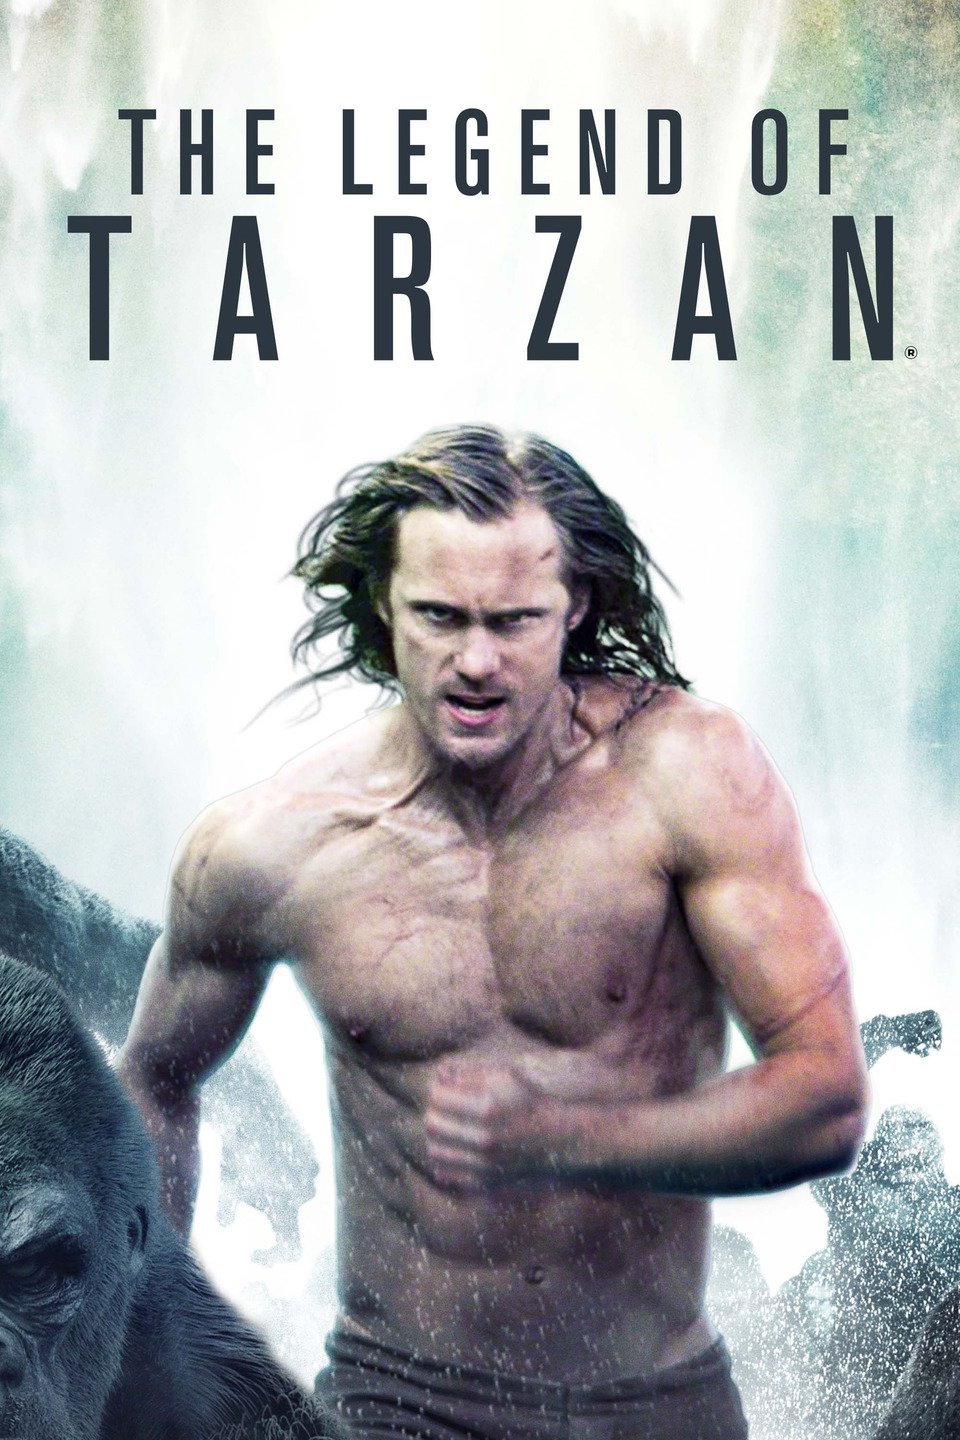 [MINI Super-HQ] The Legend of Tarzan (2016) ตำนานแห่งทาร์ซาน [1080p] [พากย์ไทย 5.1 + เสียงอังกฤษ DTS] [บรรยายไทย + อังกฤษ] [เสียงไทย + ซับไทย] [OPENLOAD]